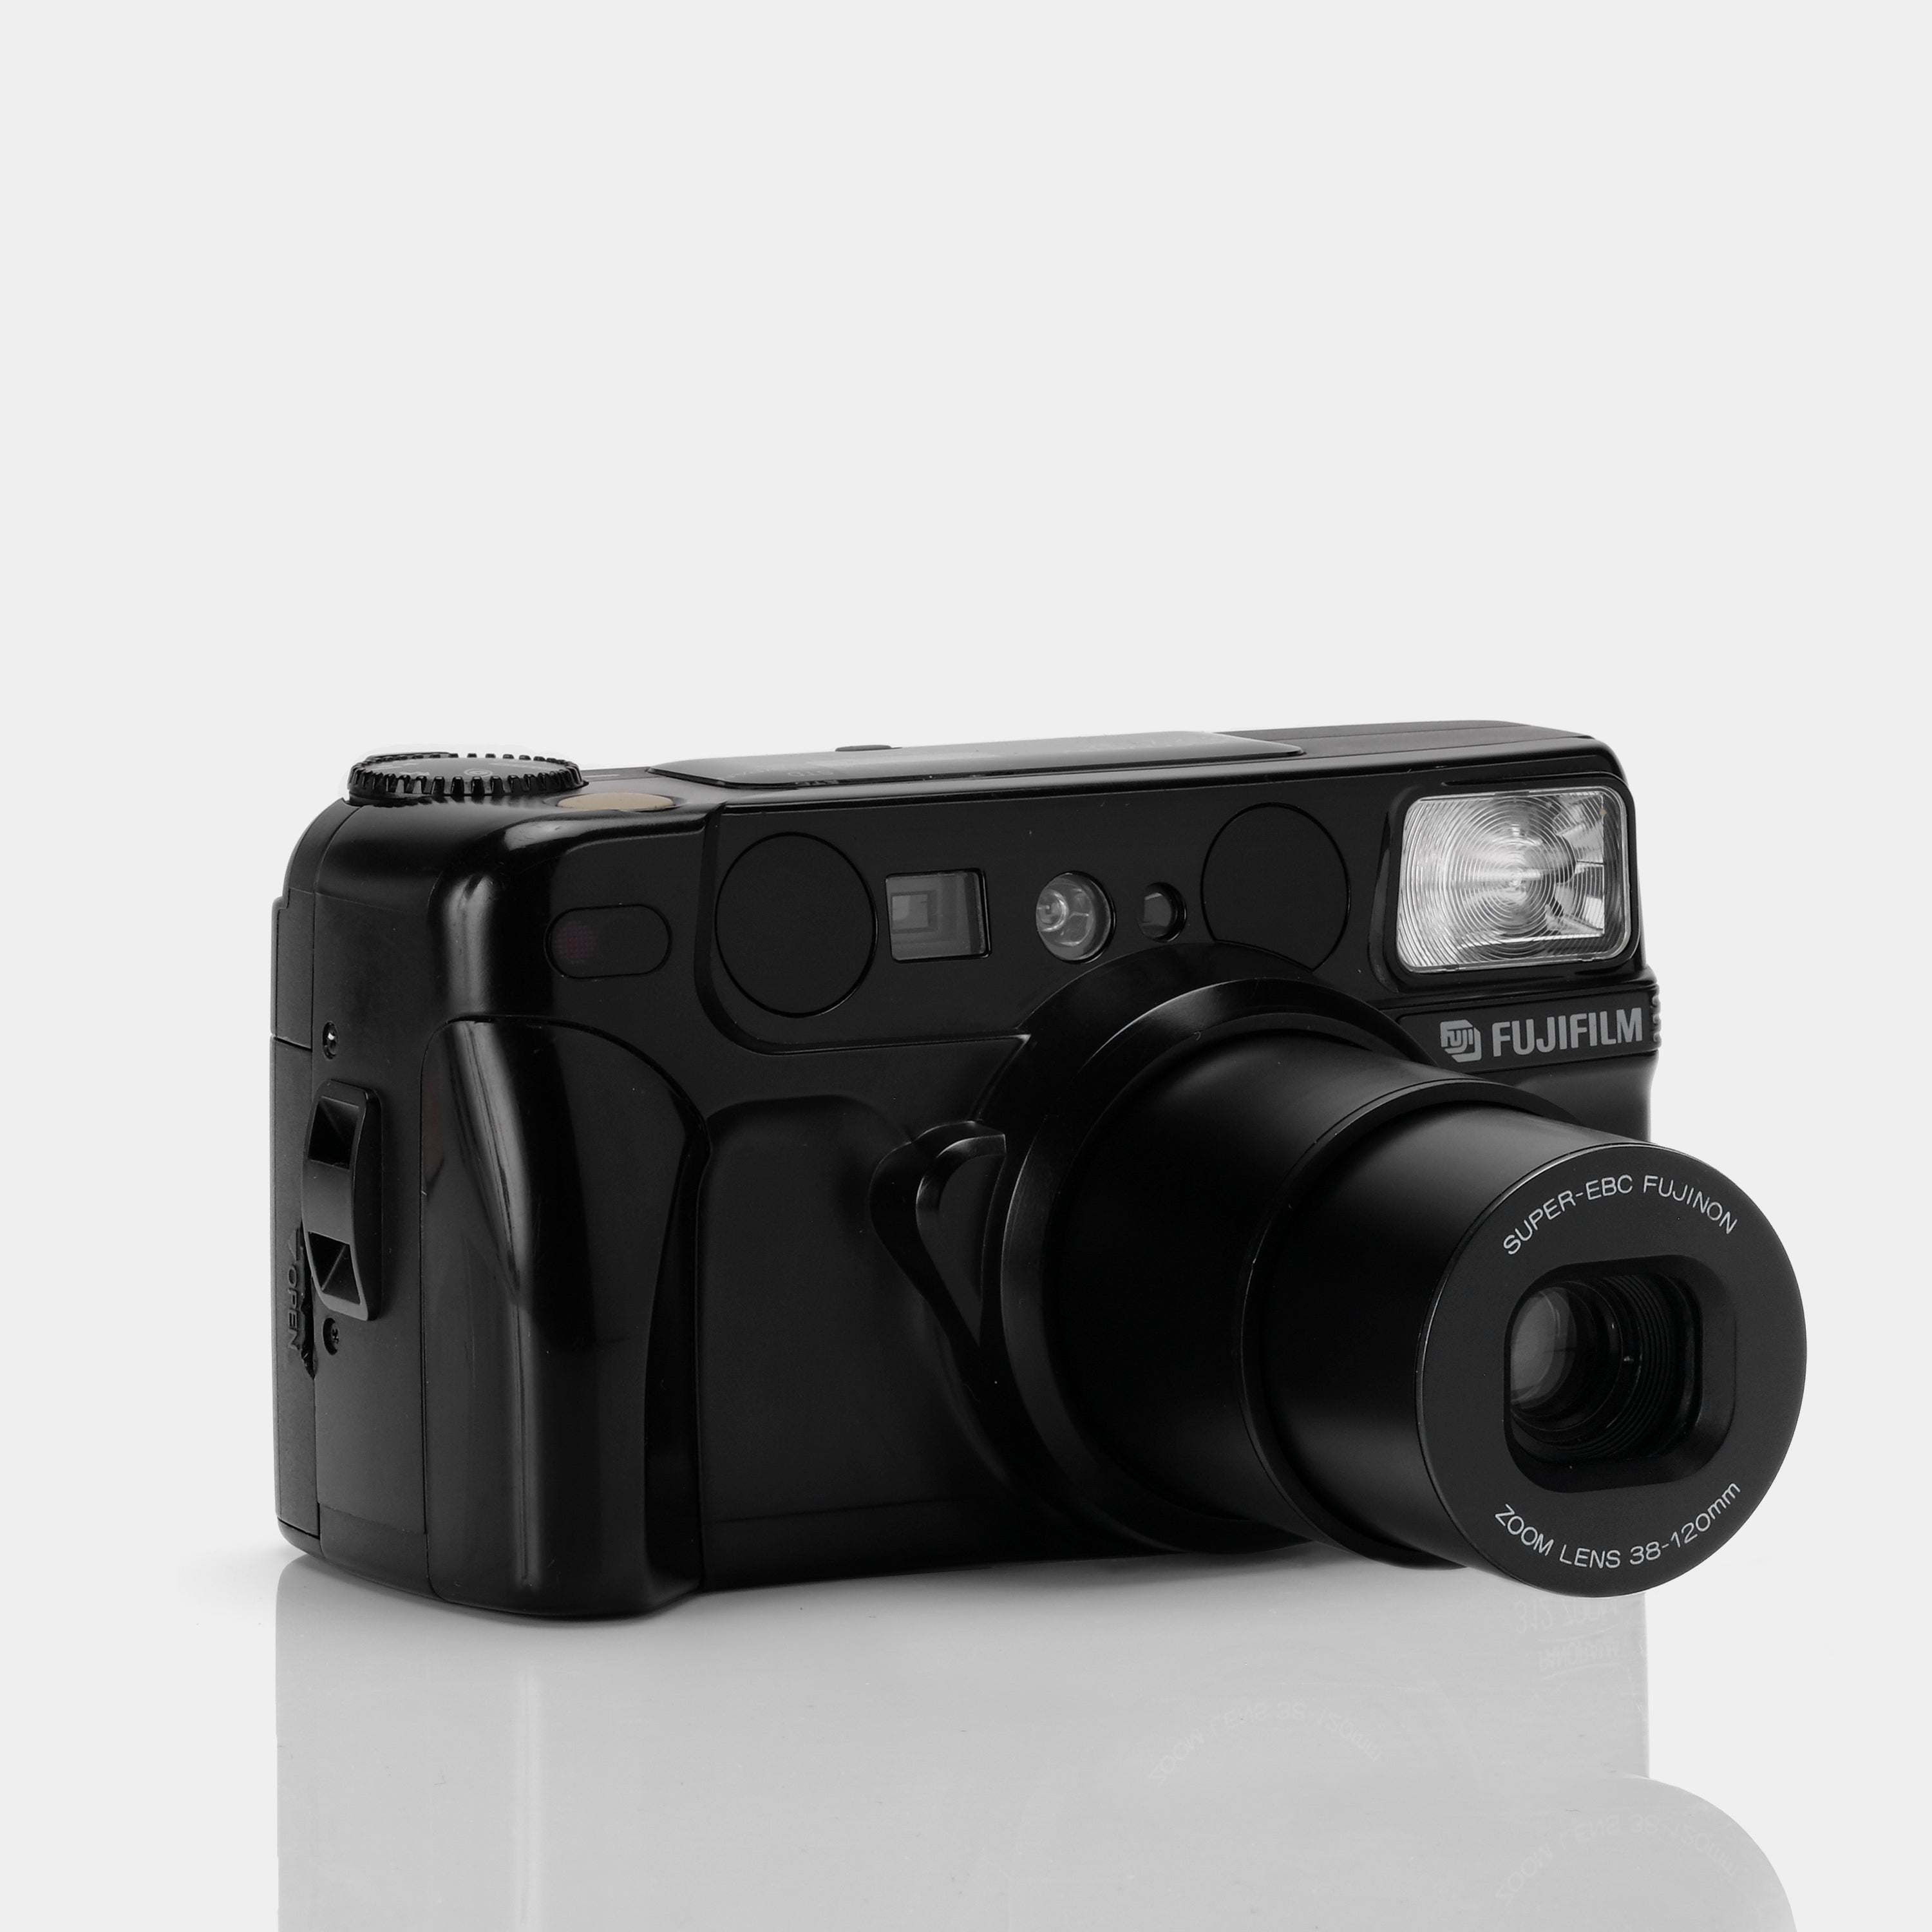 Fujifilm Discovery 312 Zoom 35mm Film Camera